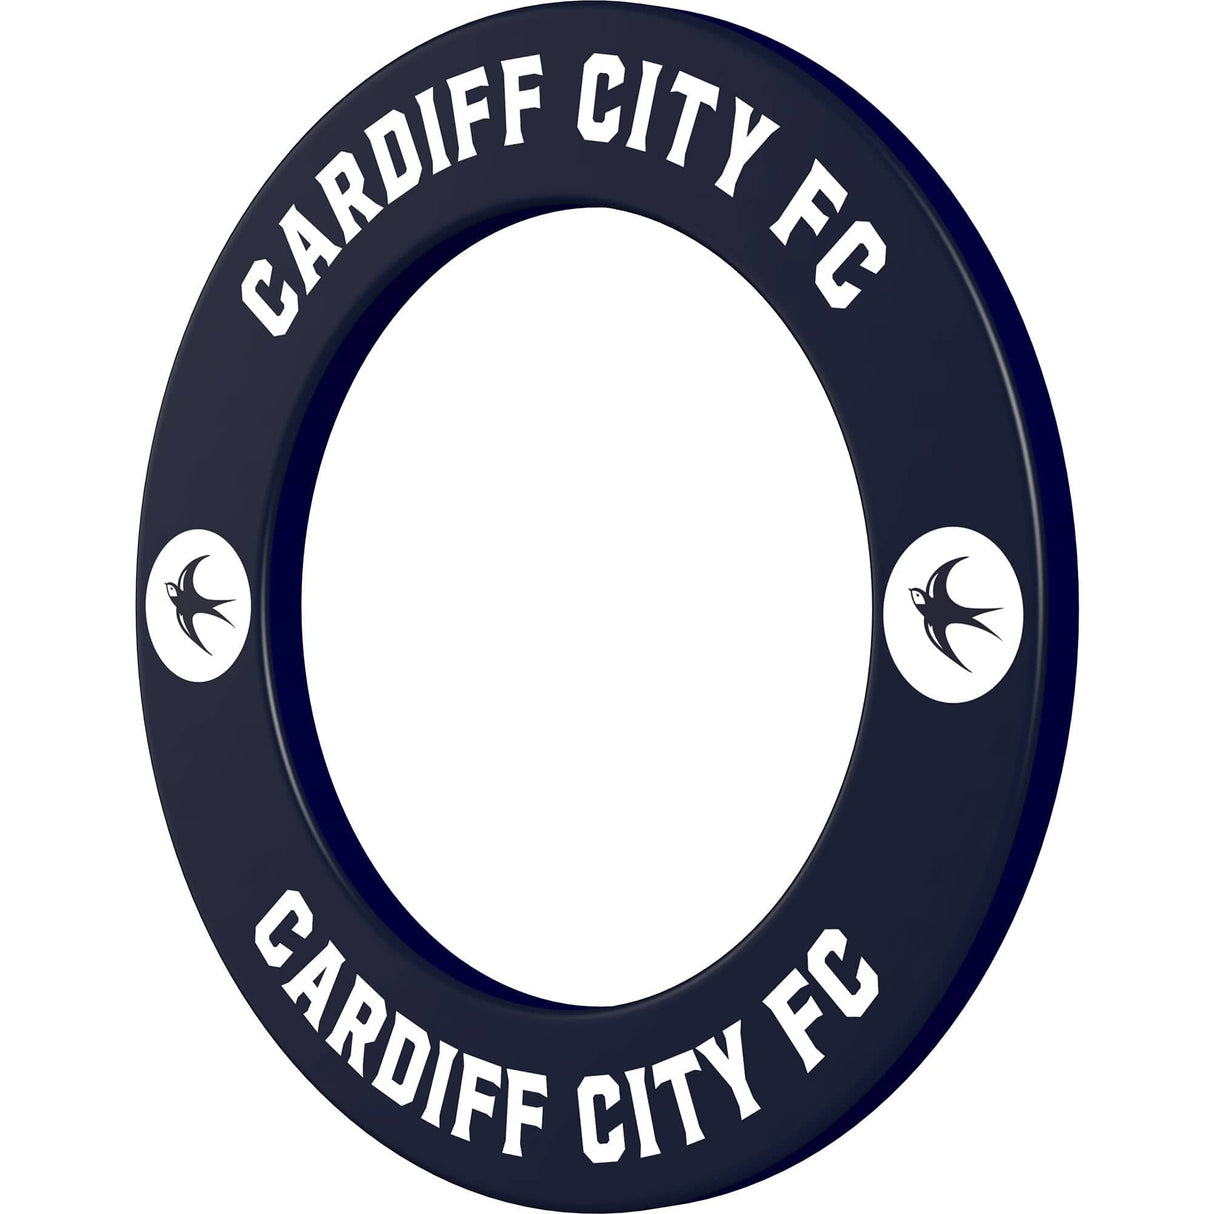 Cardiff City FC - Official Licensed - Dartboard Surround - S2 - Black Bluebird